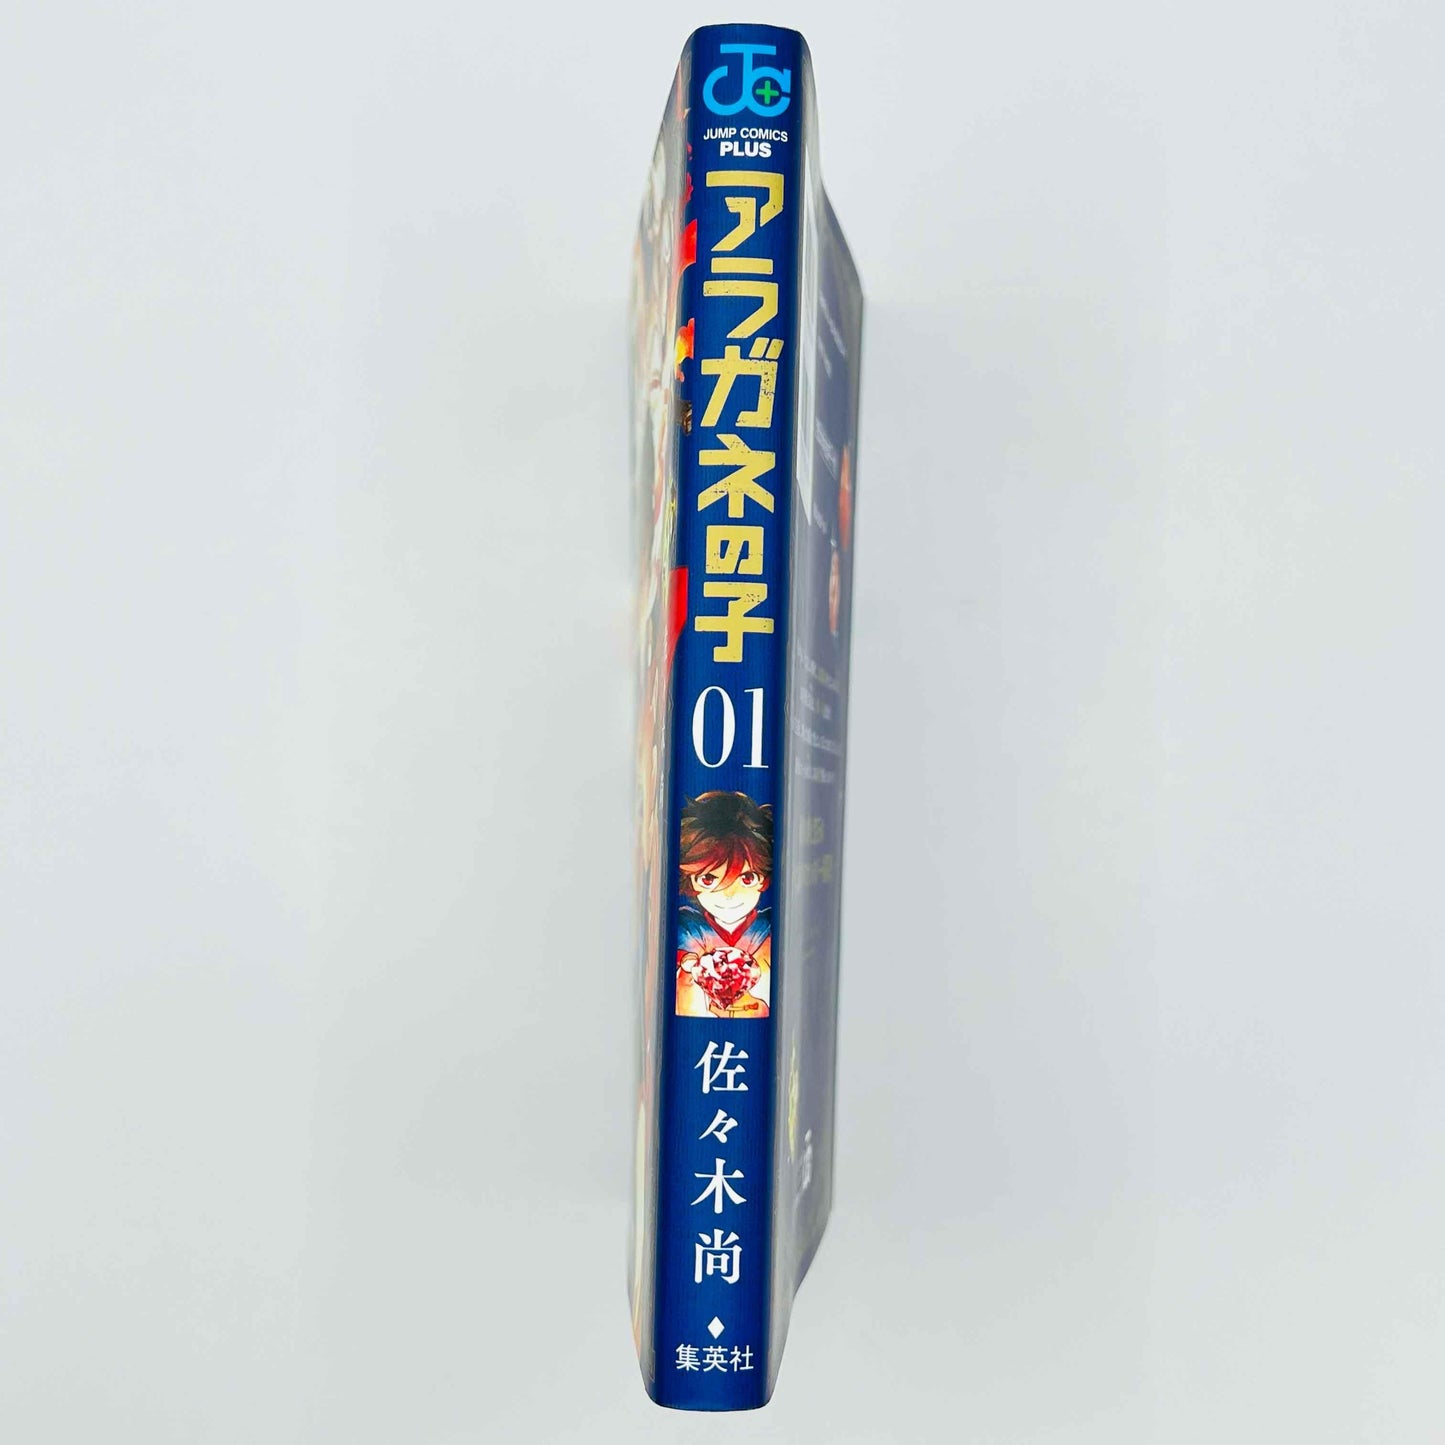 Aragane no Ko - Diamond in the Rough - Volume 01 - 1stPrint.net - 1st First Print Edition Manga Store - M-ARAGANE-01-001